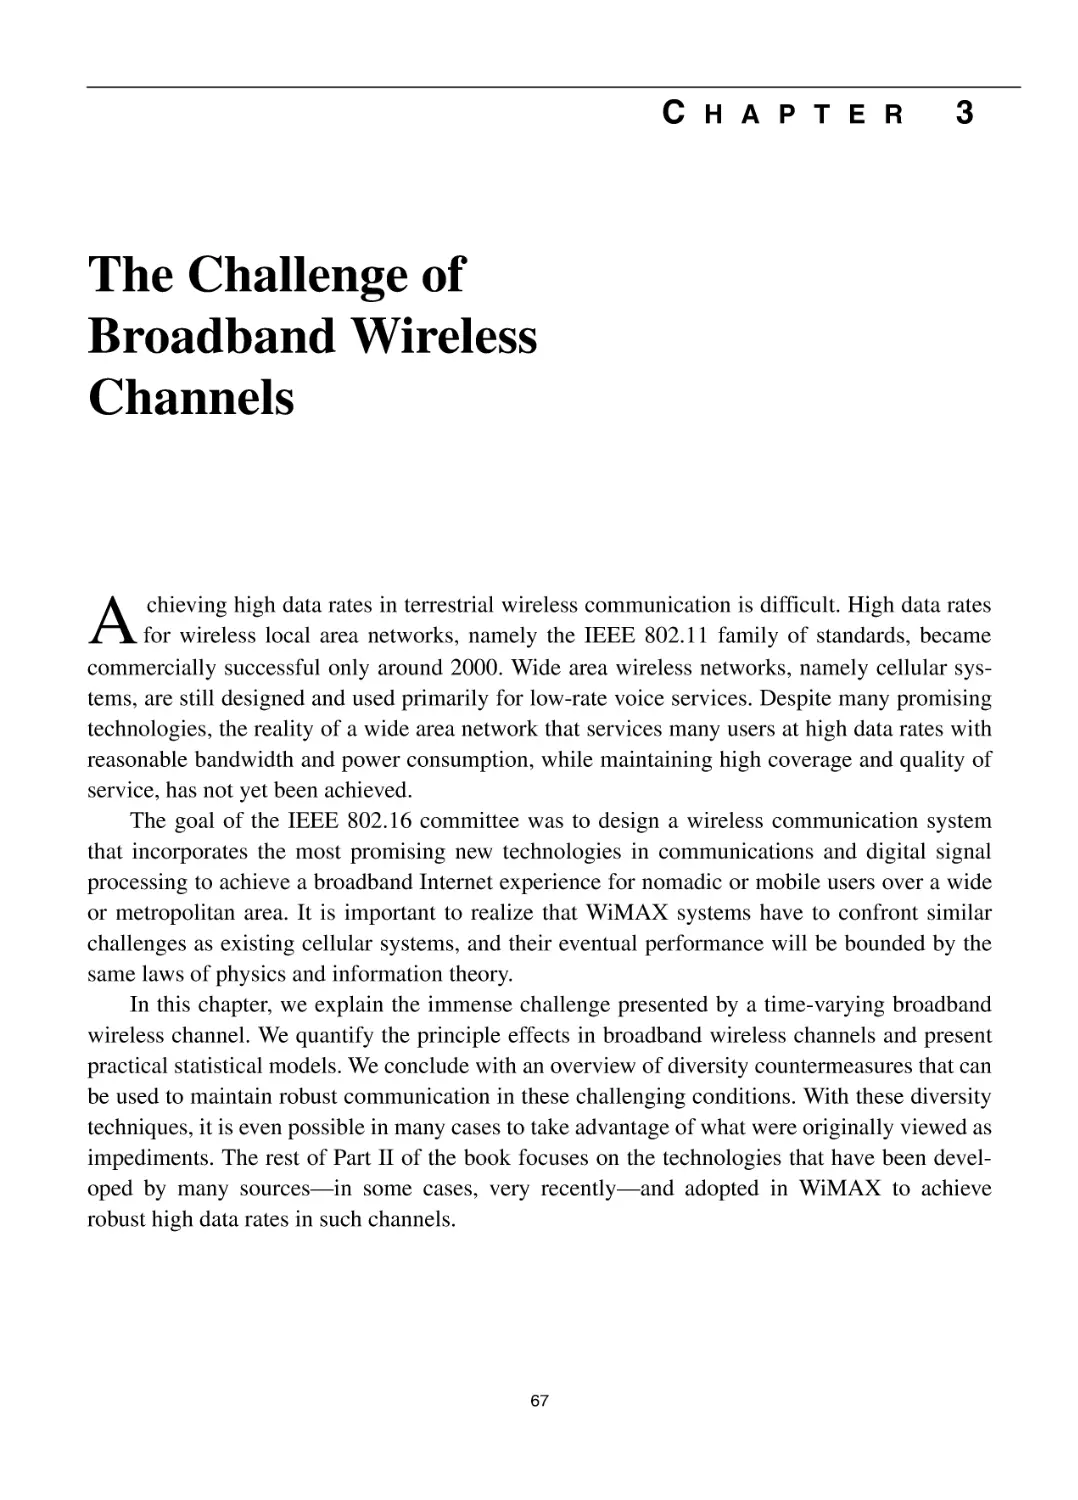 3 The Challenge of Broadband Wireless Channels